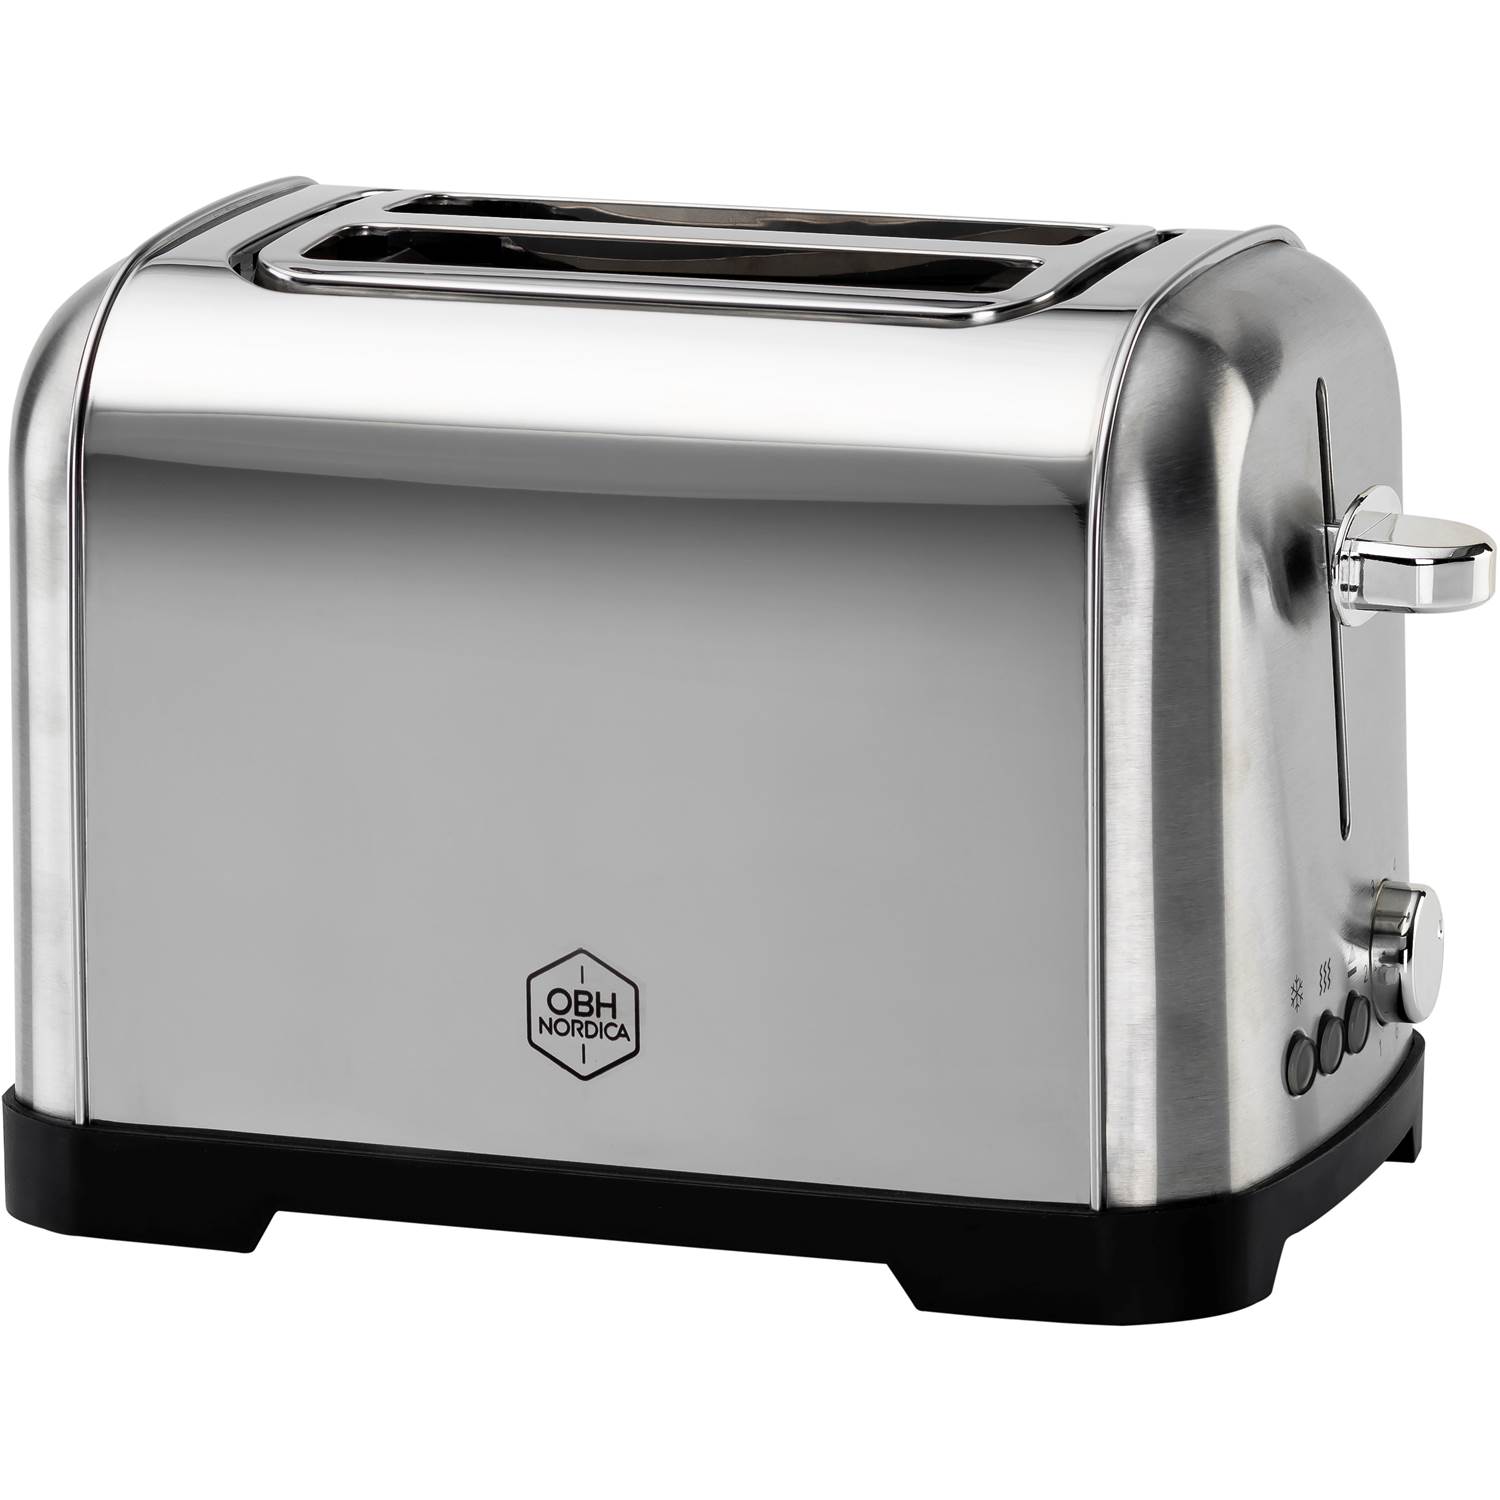 OBH Nordica Toaster 2 Slice 2272